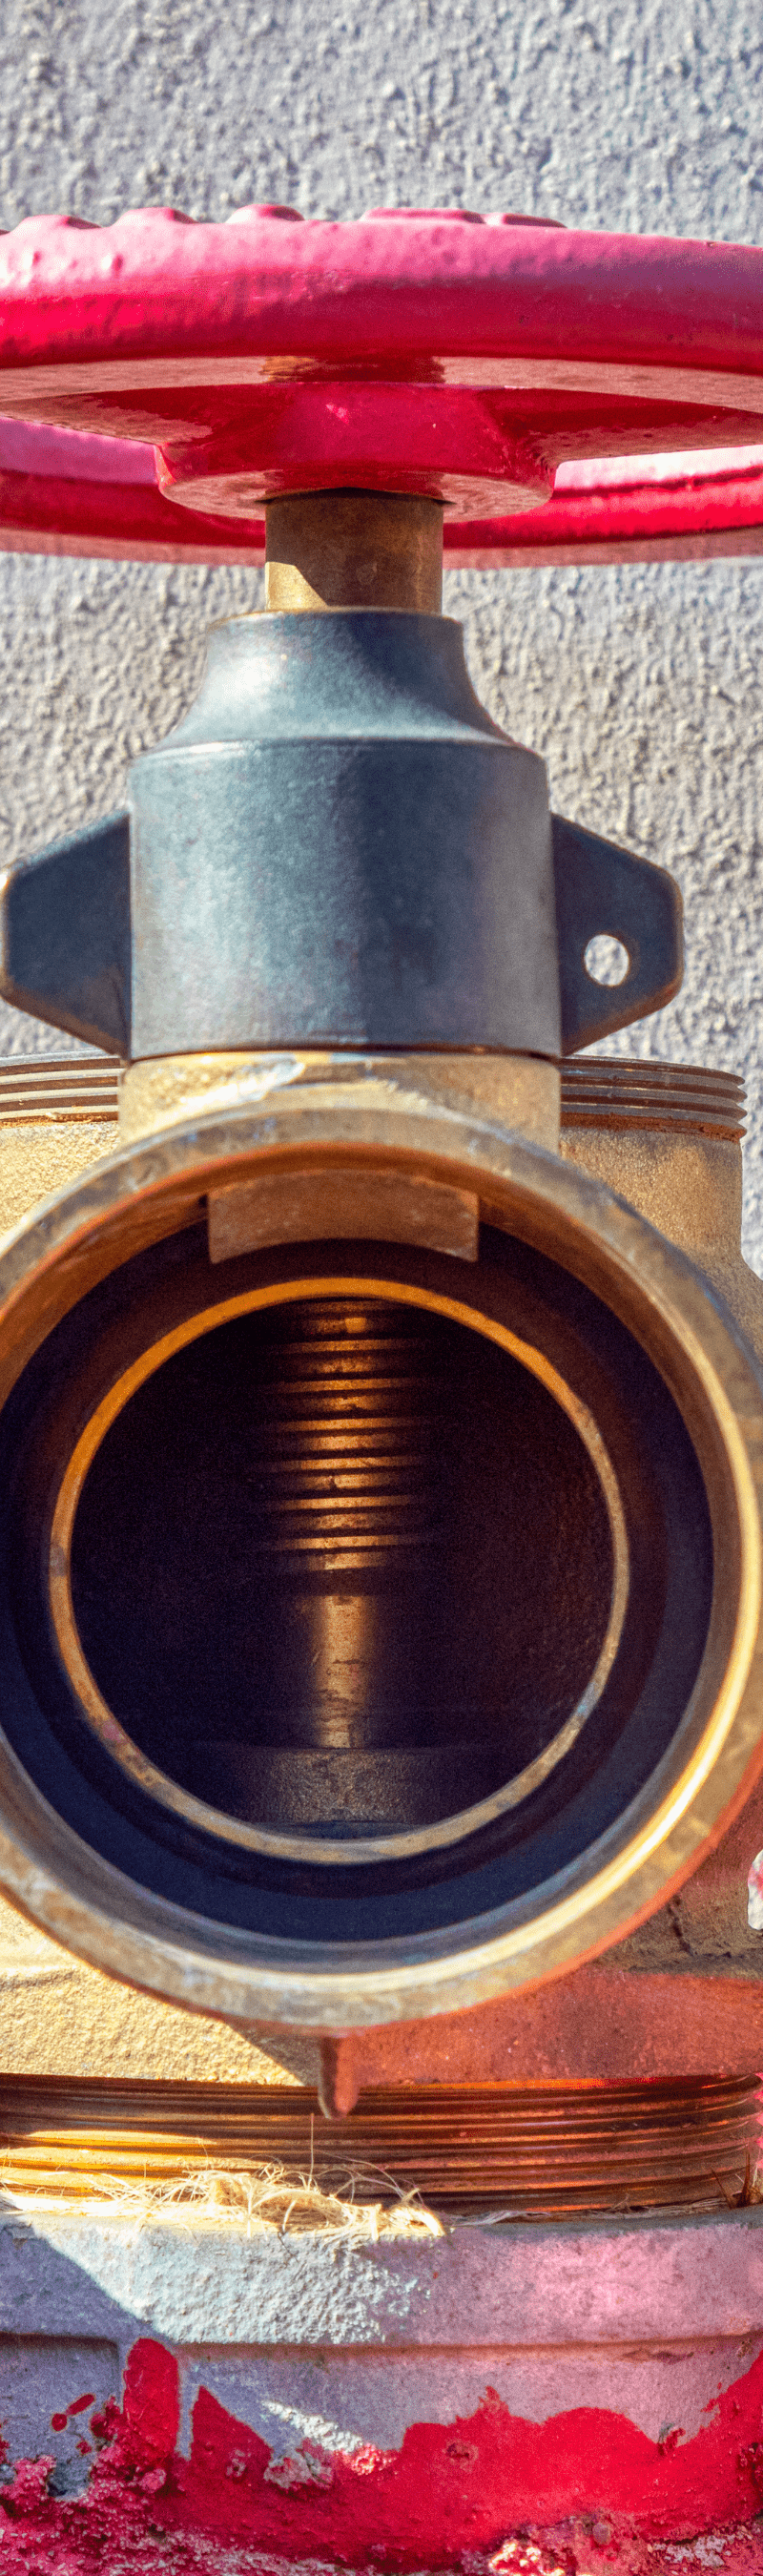 valve repair and replacement